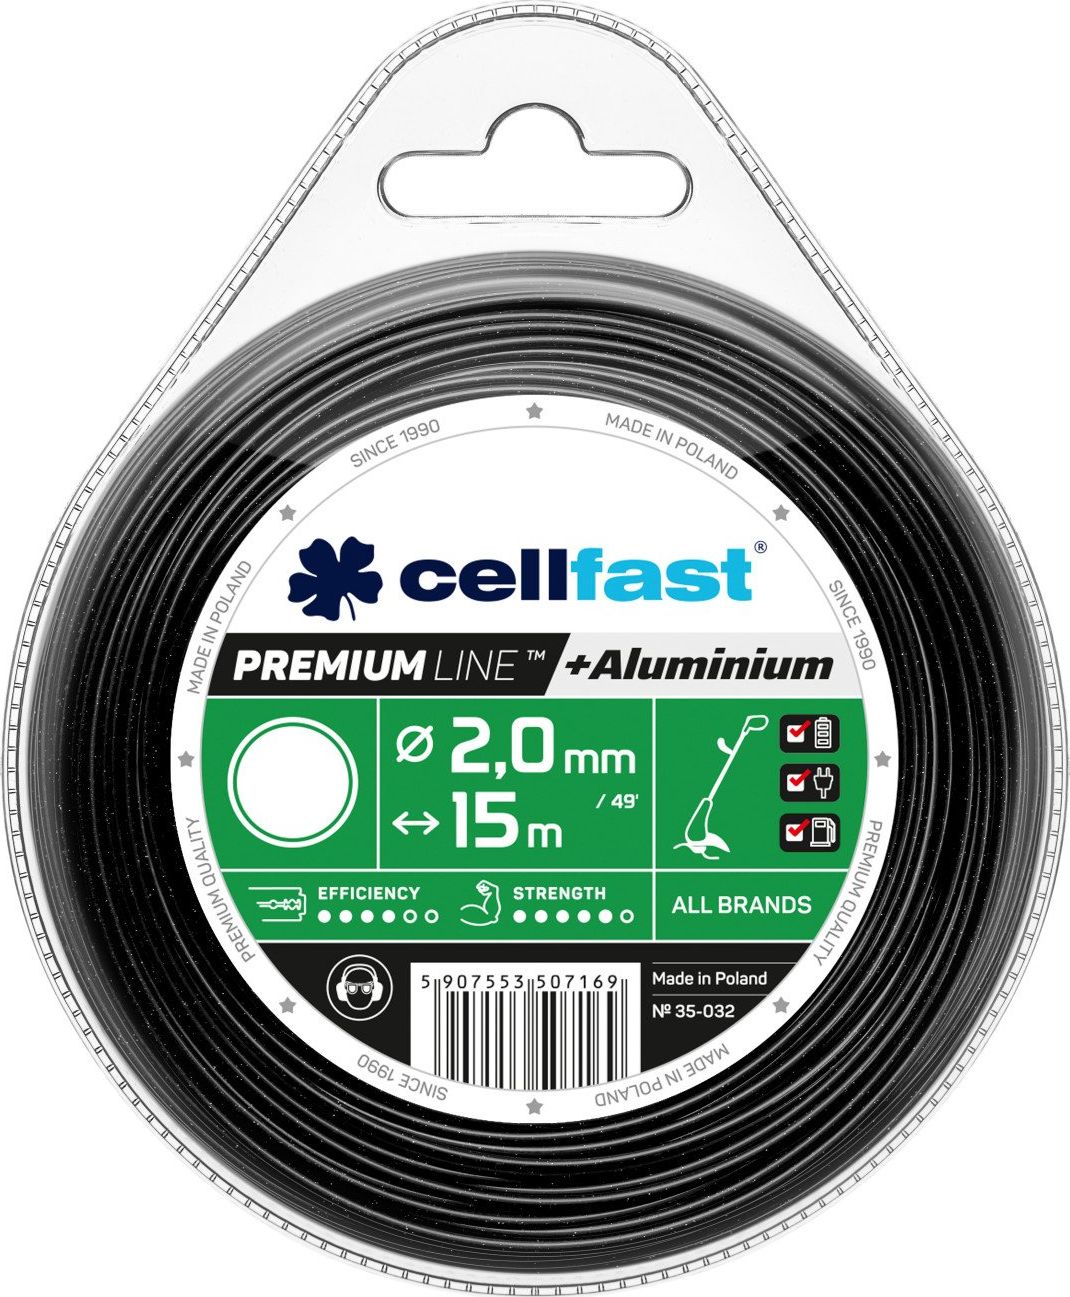 Cellfast zylka tnaca premium 2,4mm/15m okragla (35-033) 35-033 (5907553507176) Zāles pļāvējs - Trimmeris